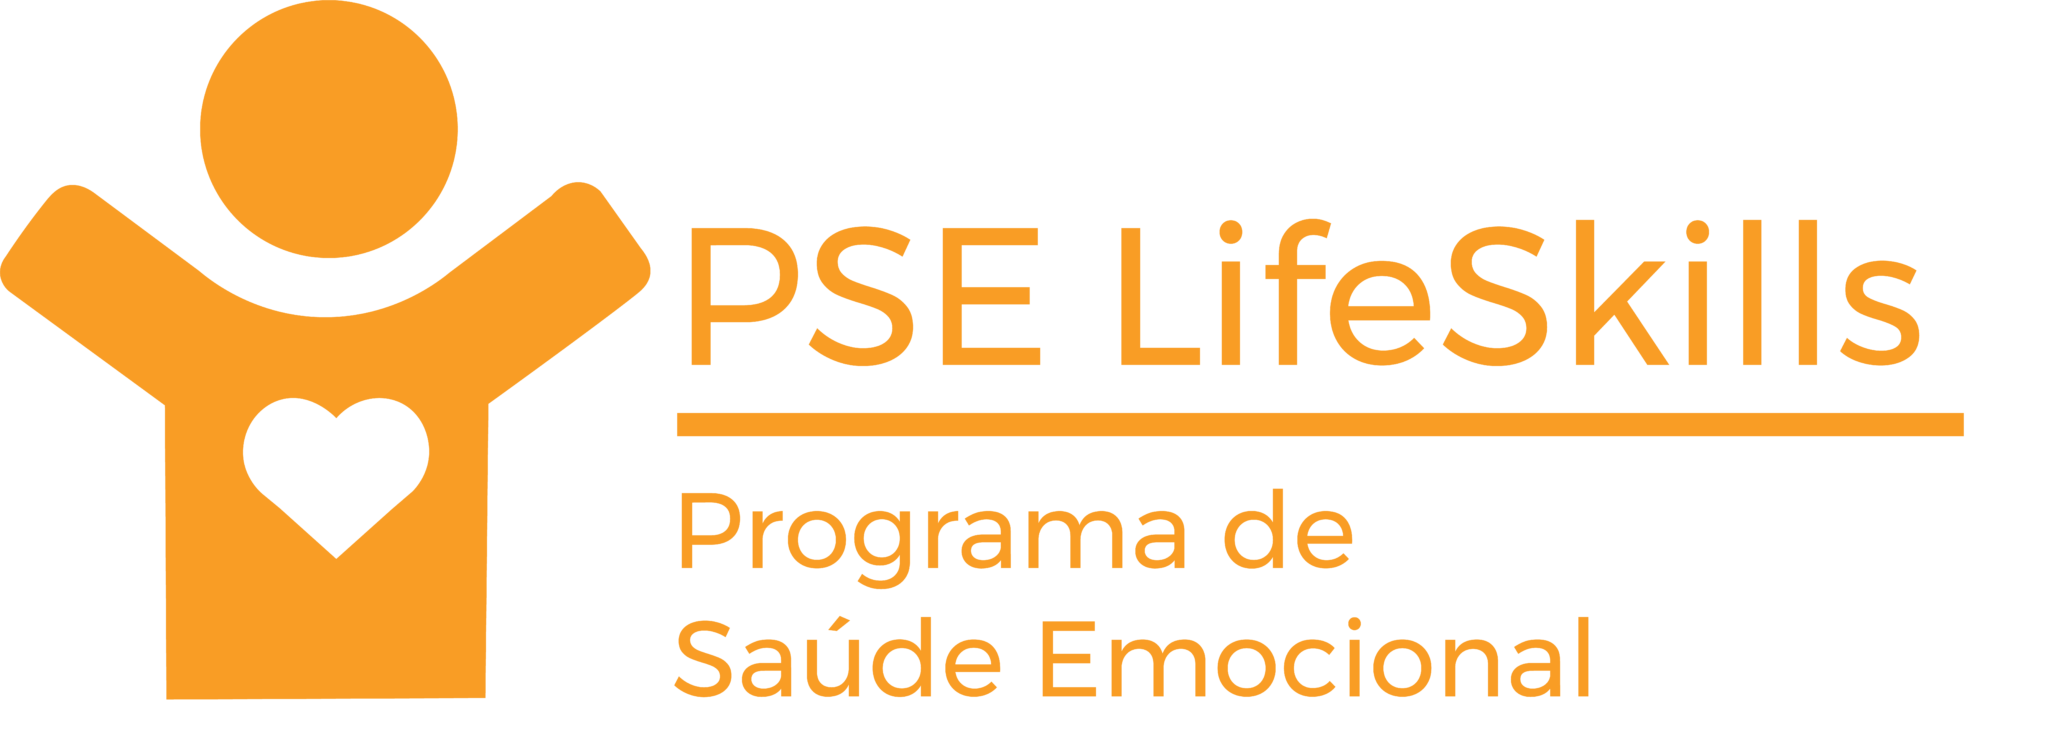 Logo PSE LifeSkills